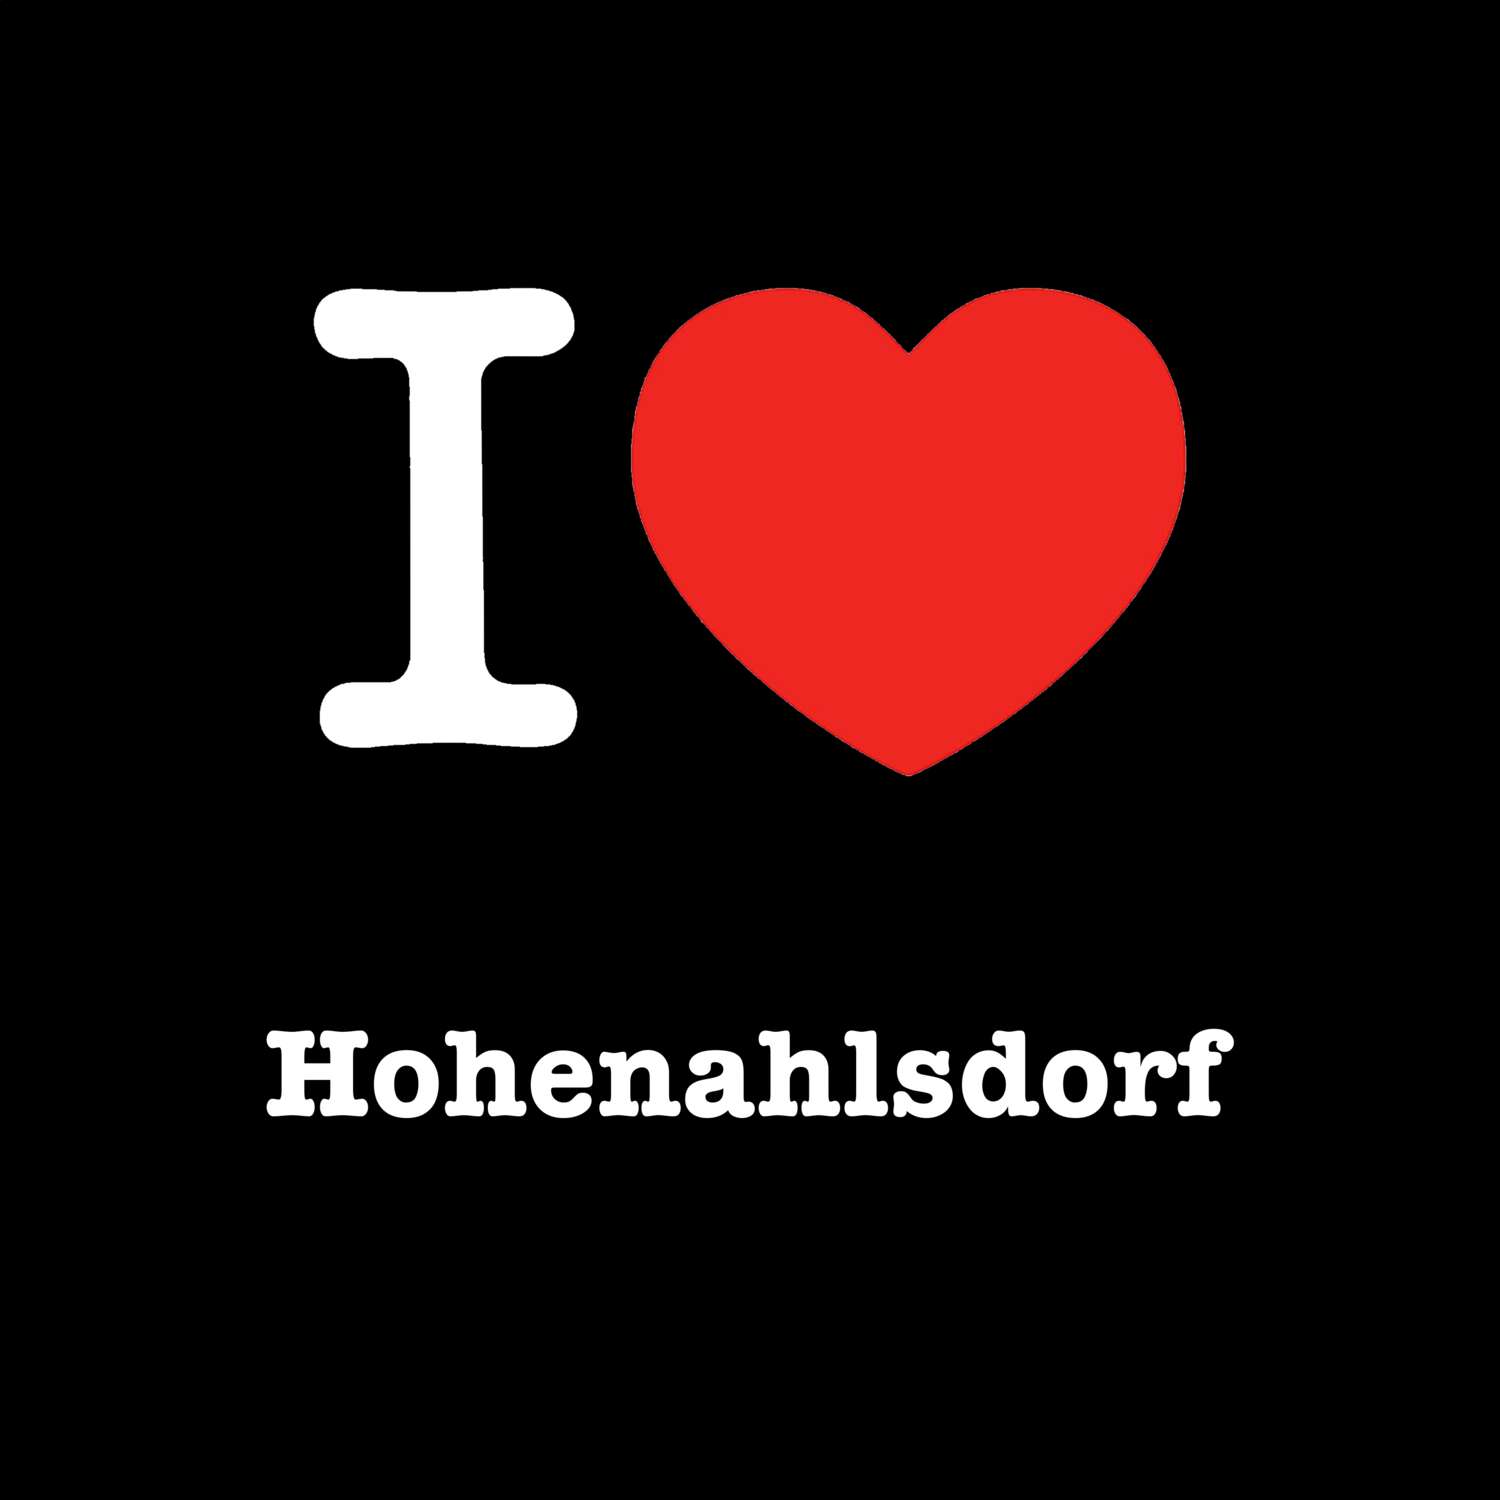 Hohenahlsdorf T-Shirt »I love«